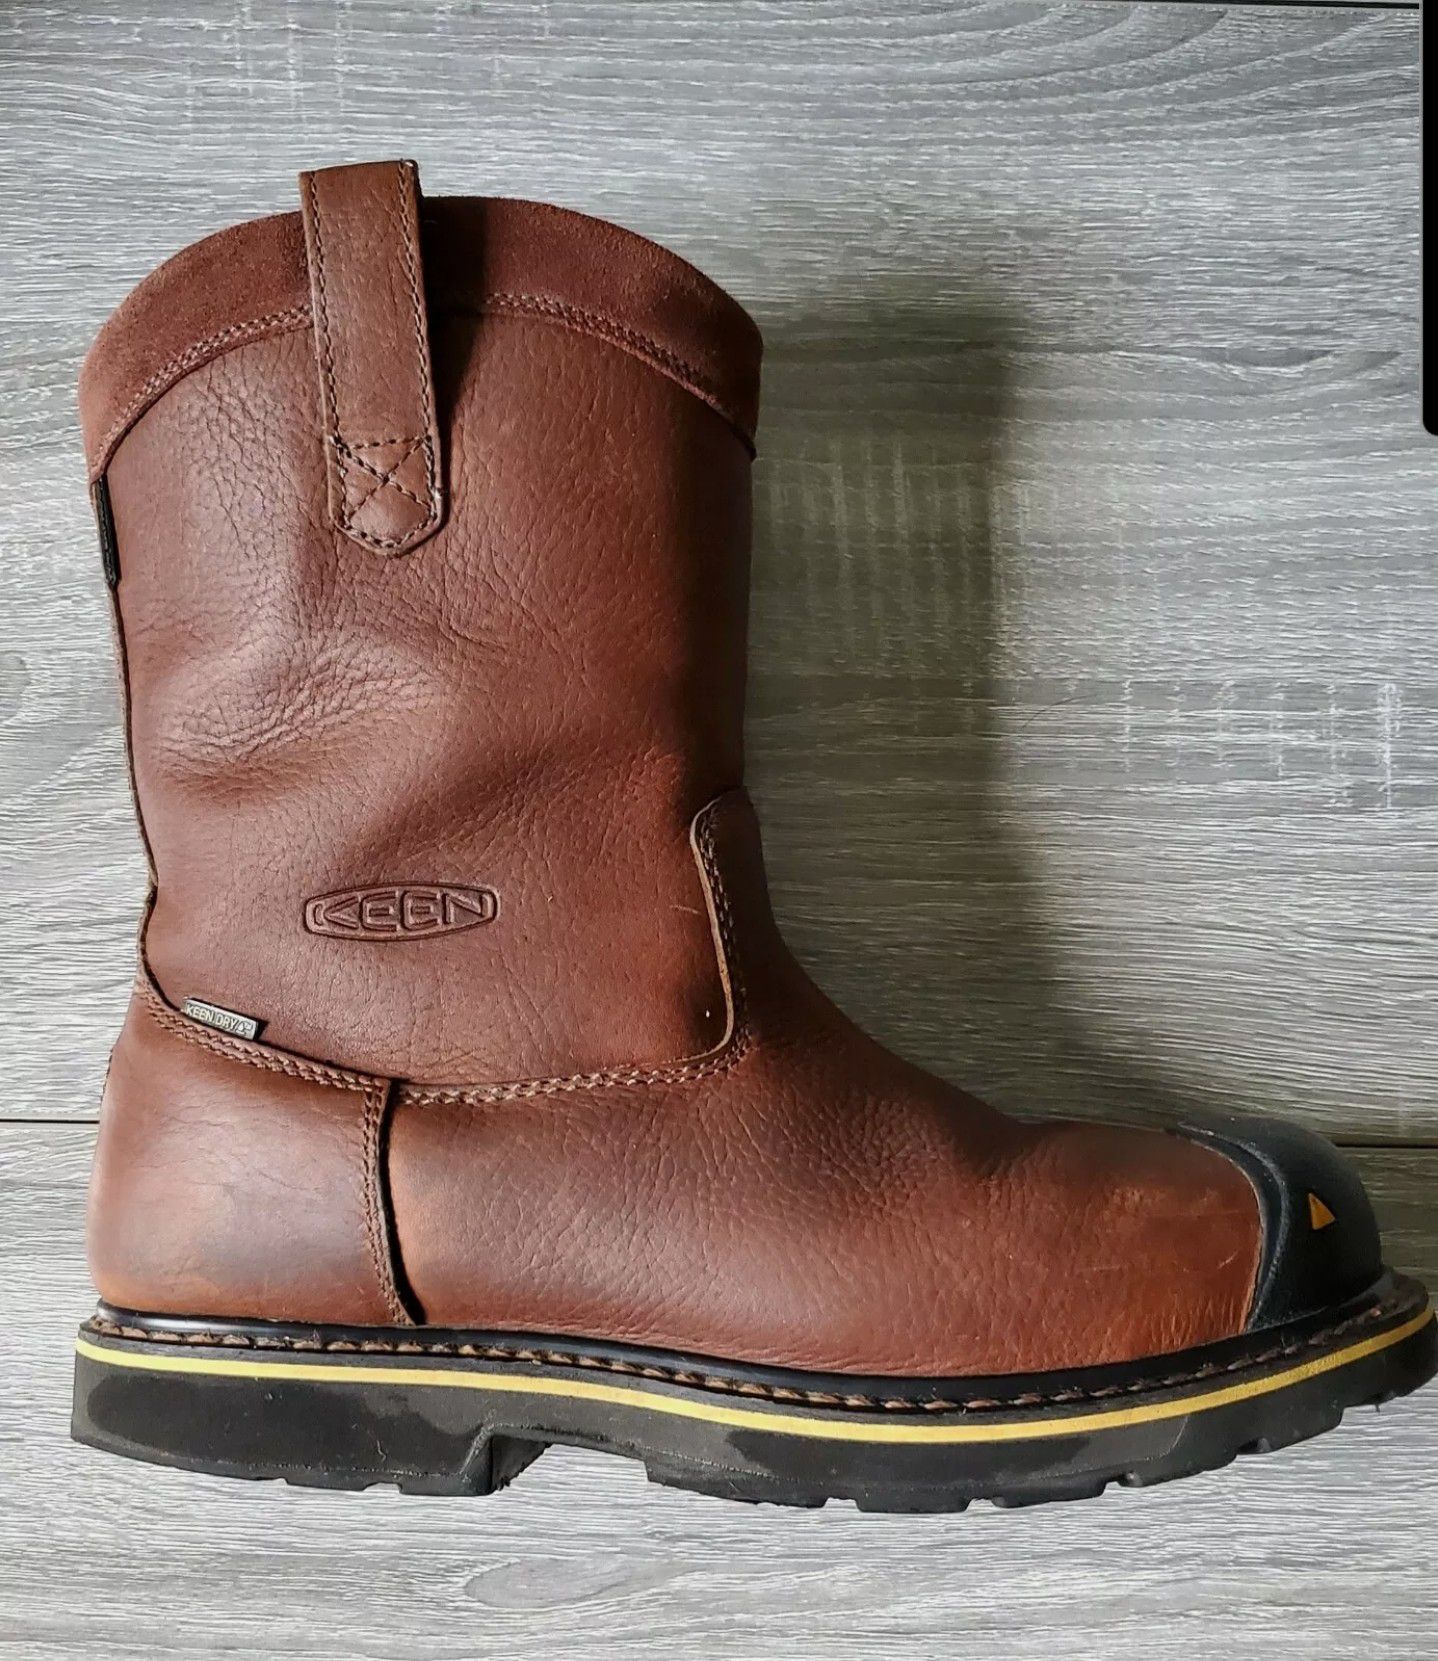 KEEN Men's Dallas Wellington, Steel Toe Work Boots-Brown Leather, Size 10.5